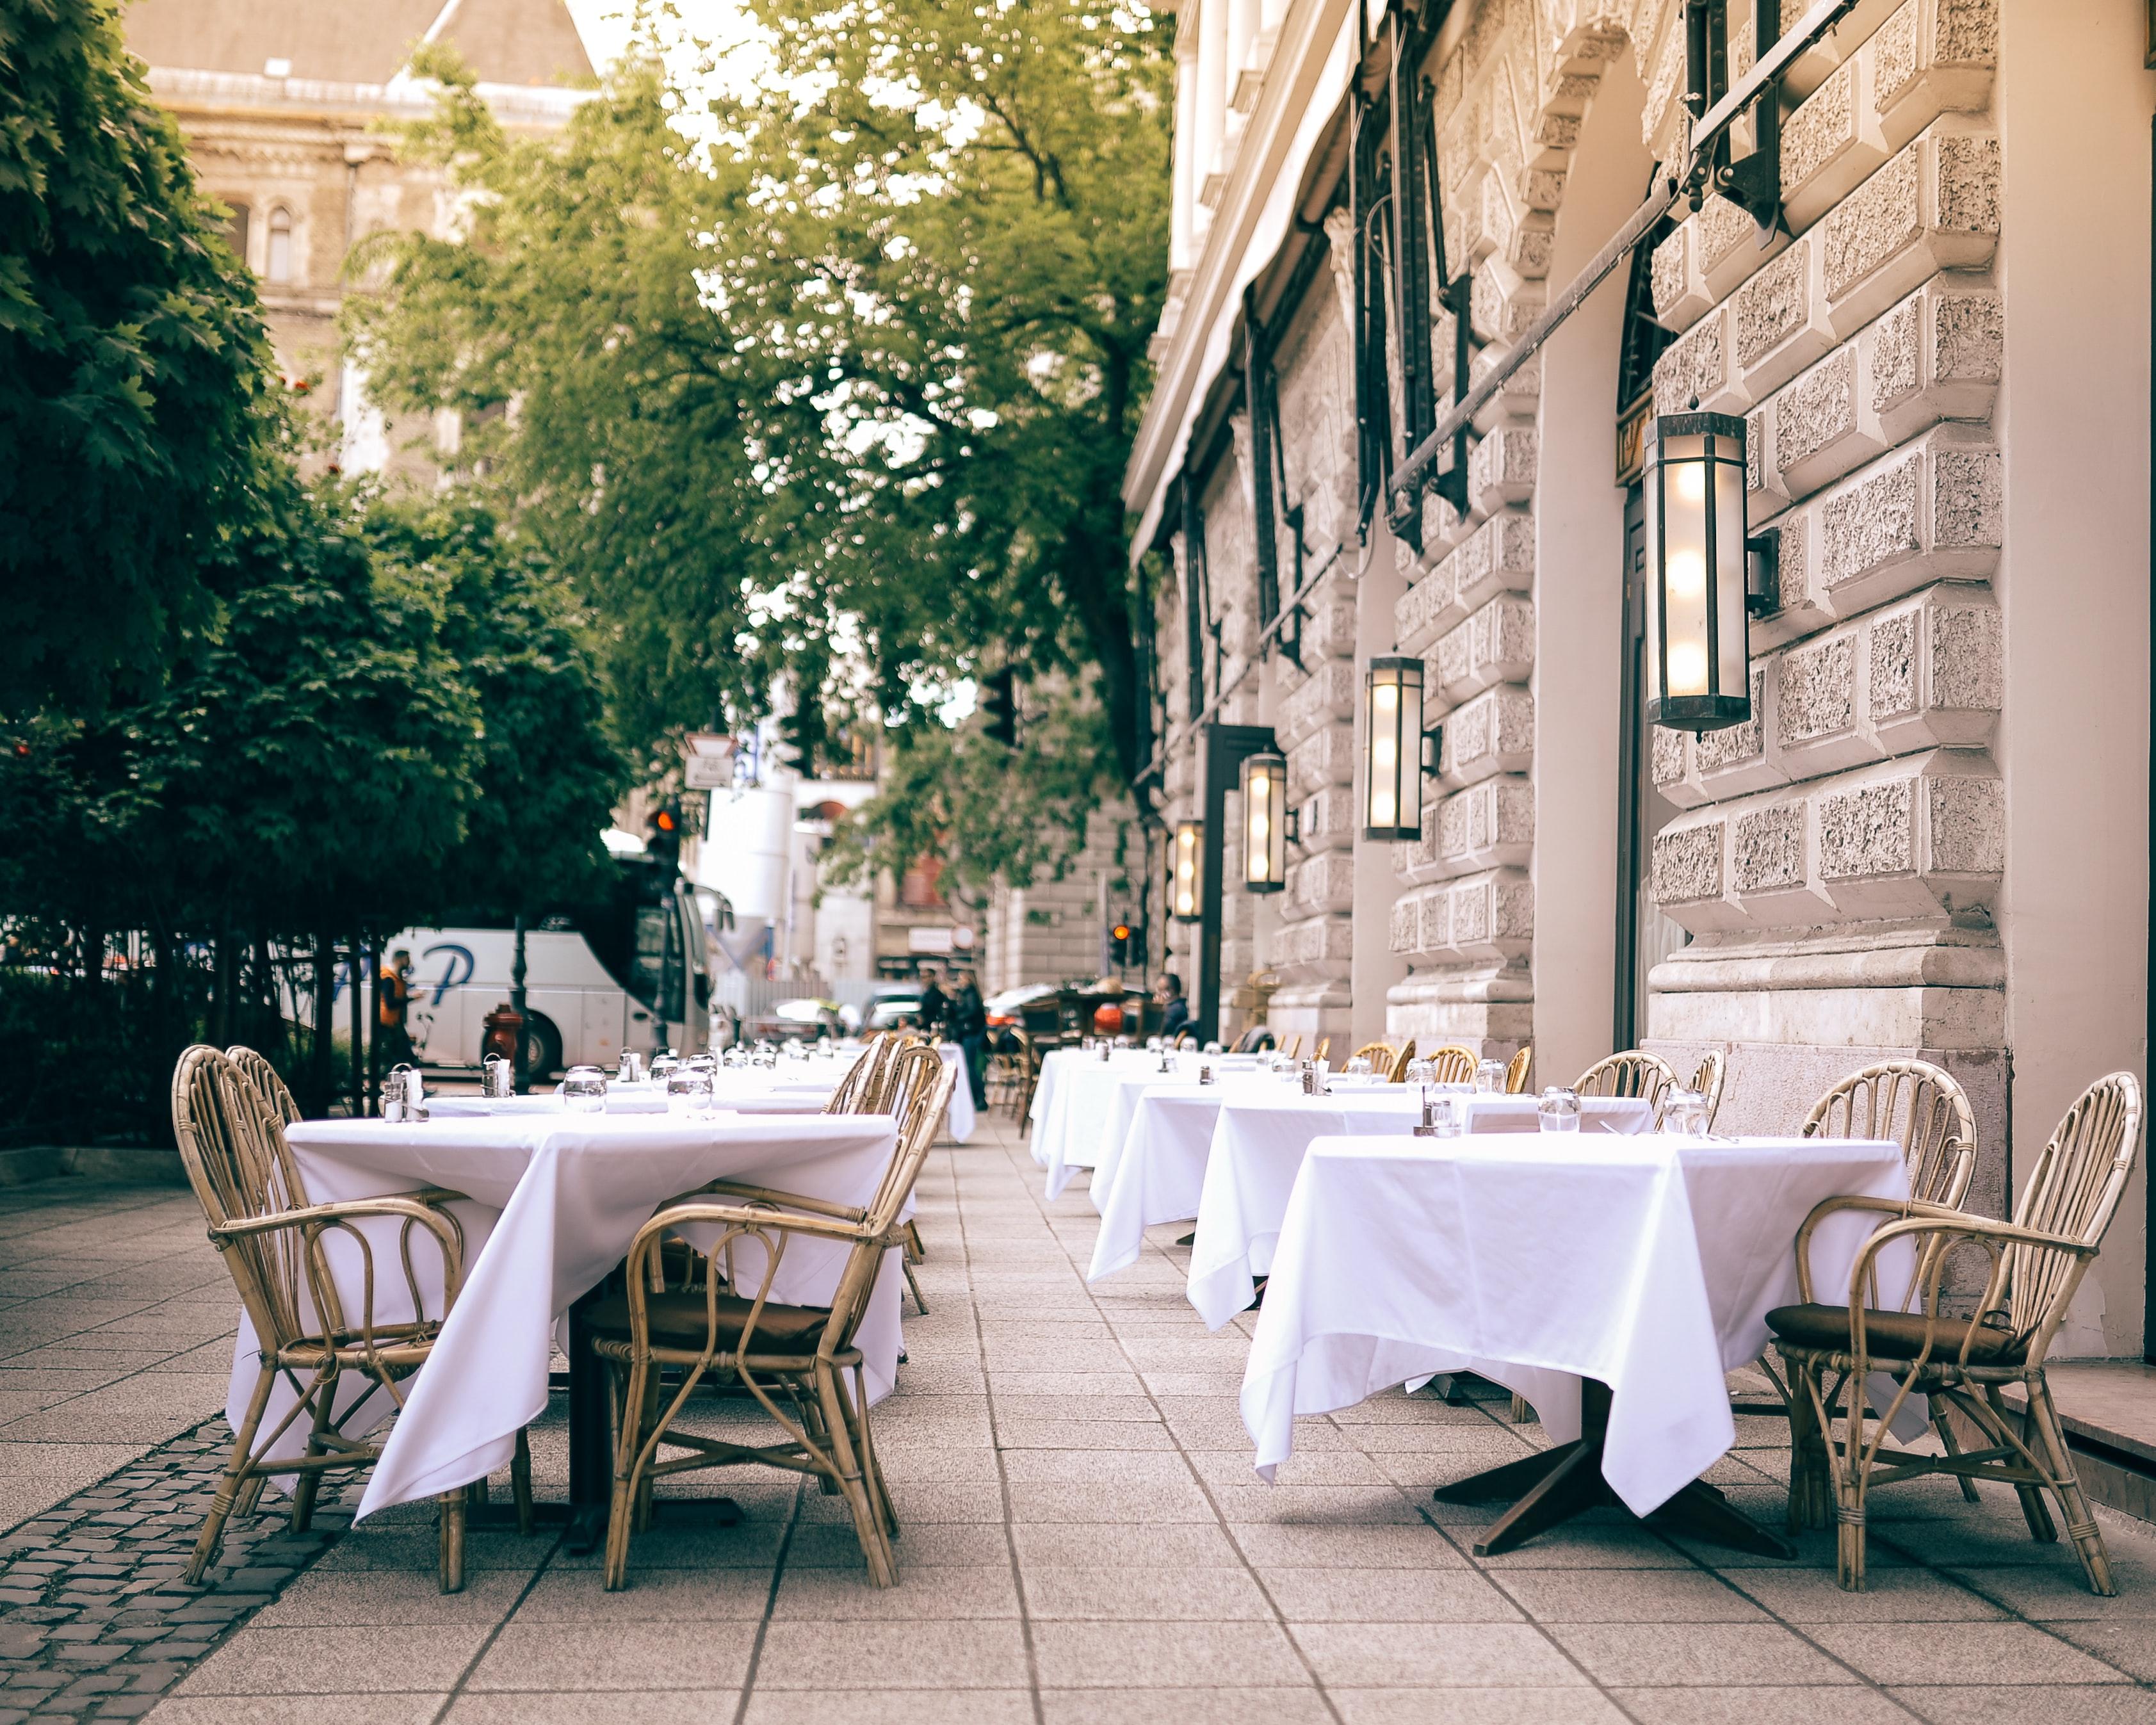 Outside restaurant - Upscale Tables 